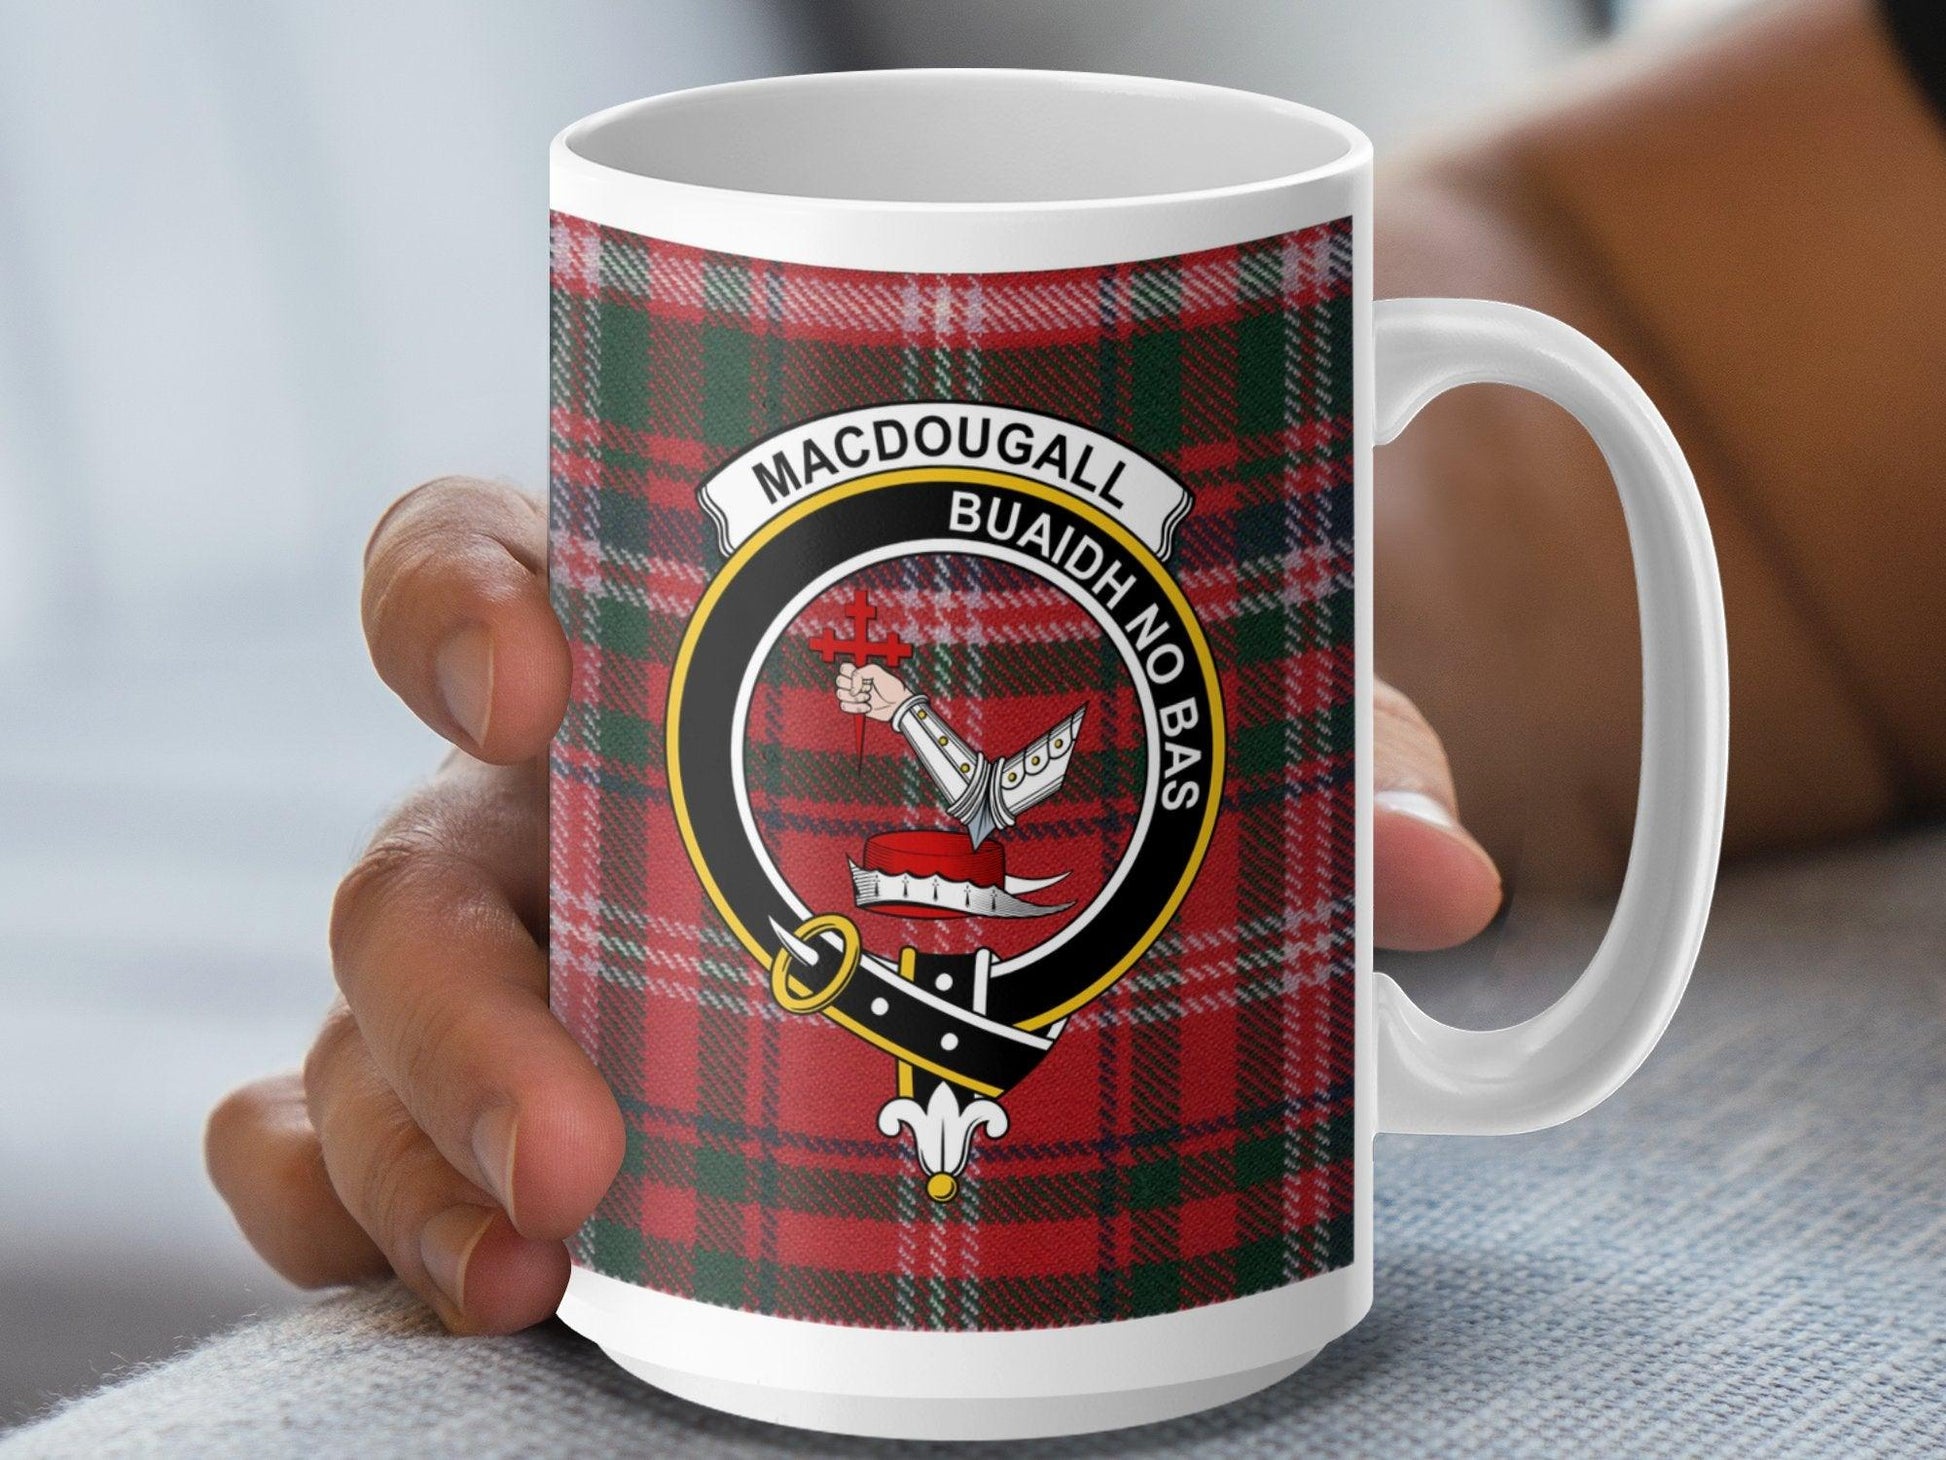 Traditional Scottish MacDougall Clan Crest Plaid Design Mug - Living Stone Gifts